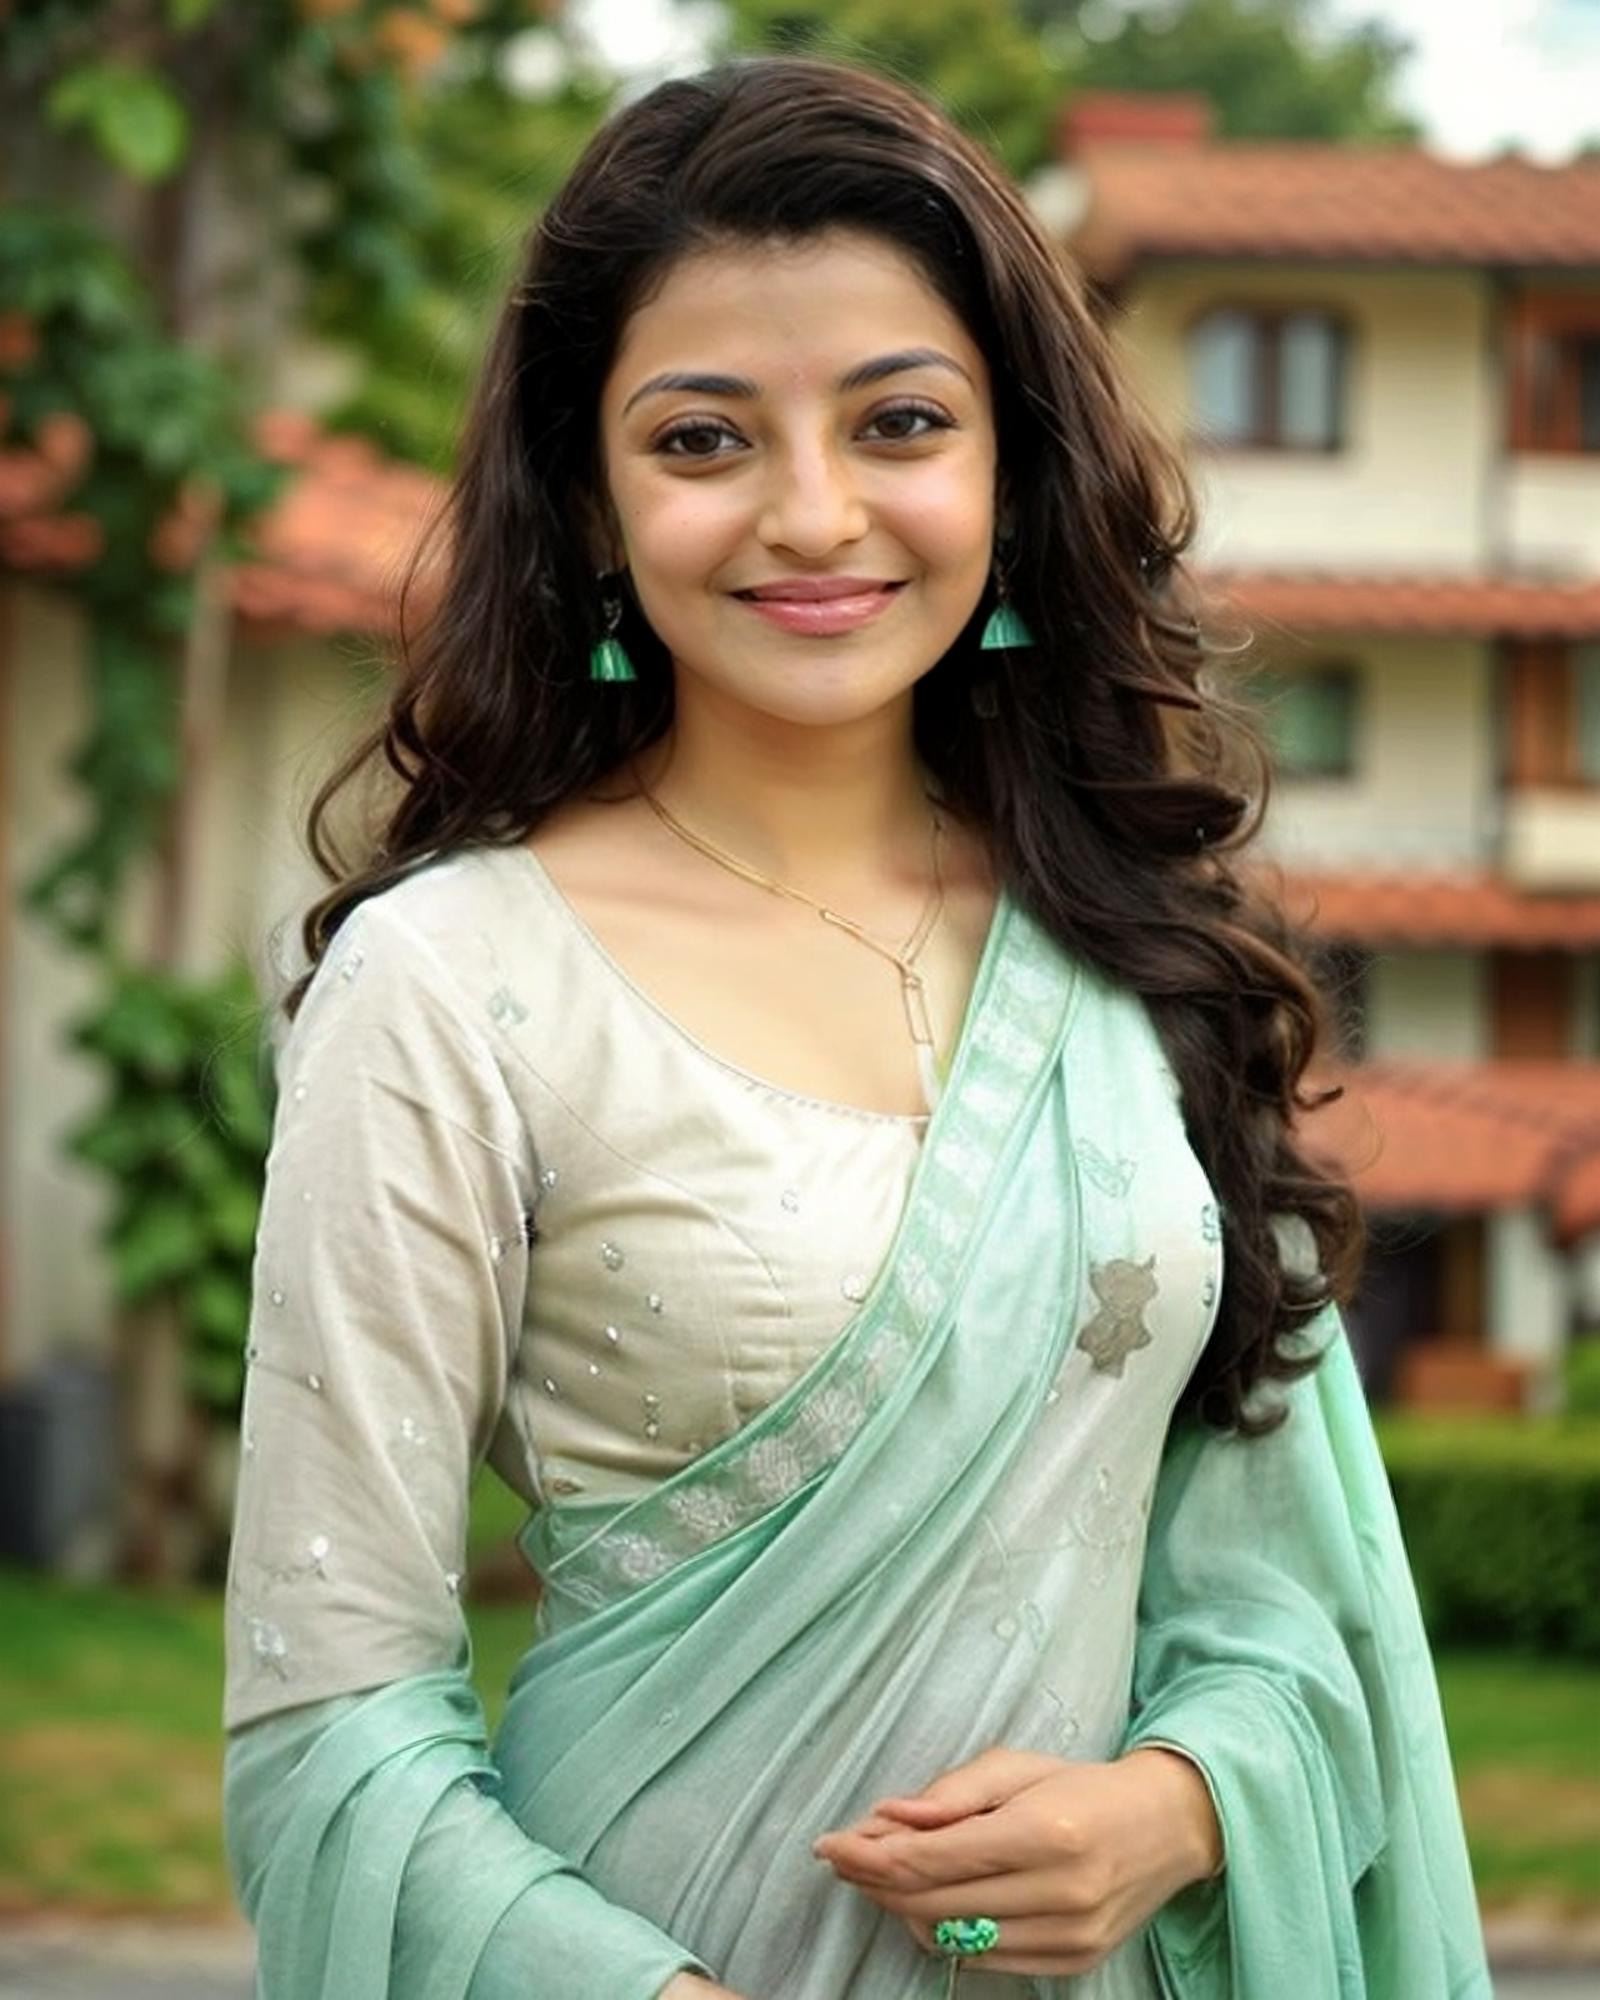 Kajal Aggarwal - Indian Actress (SD1.5) image by Desi_Cafe